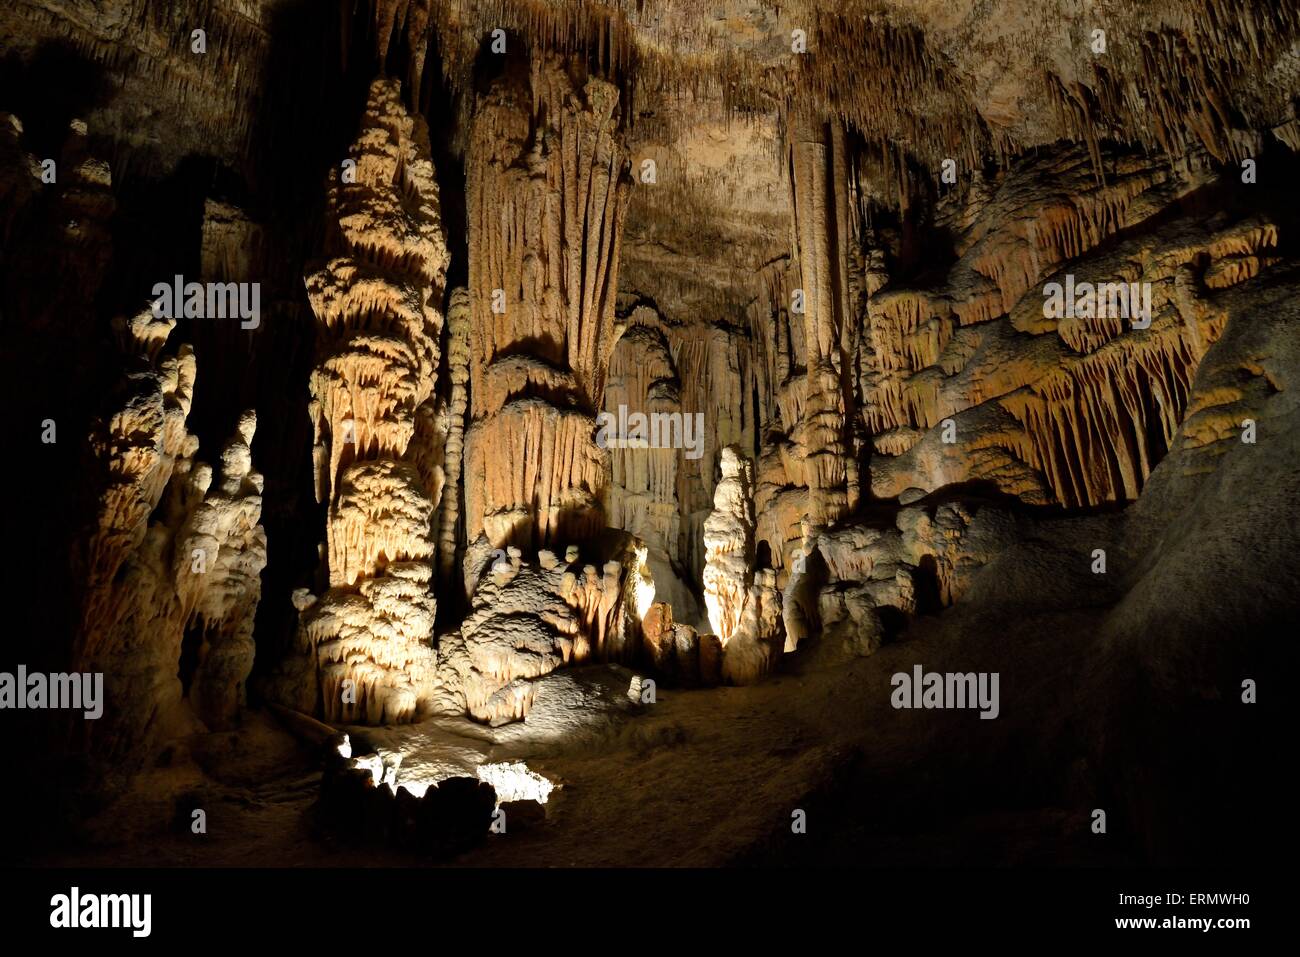 Grottes del Drach, Cuevas del Drach, Caverne du Dragon, Porto Cristo, Majorque, Îles Baléares, Espagne Banque D'Images